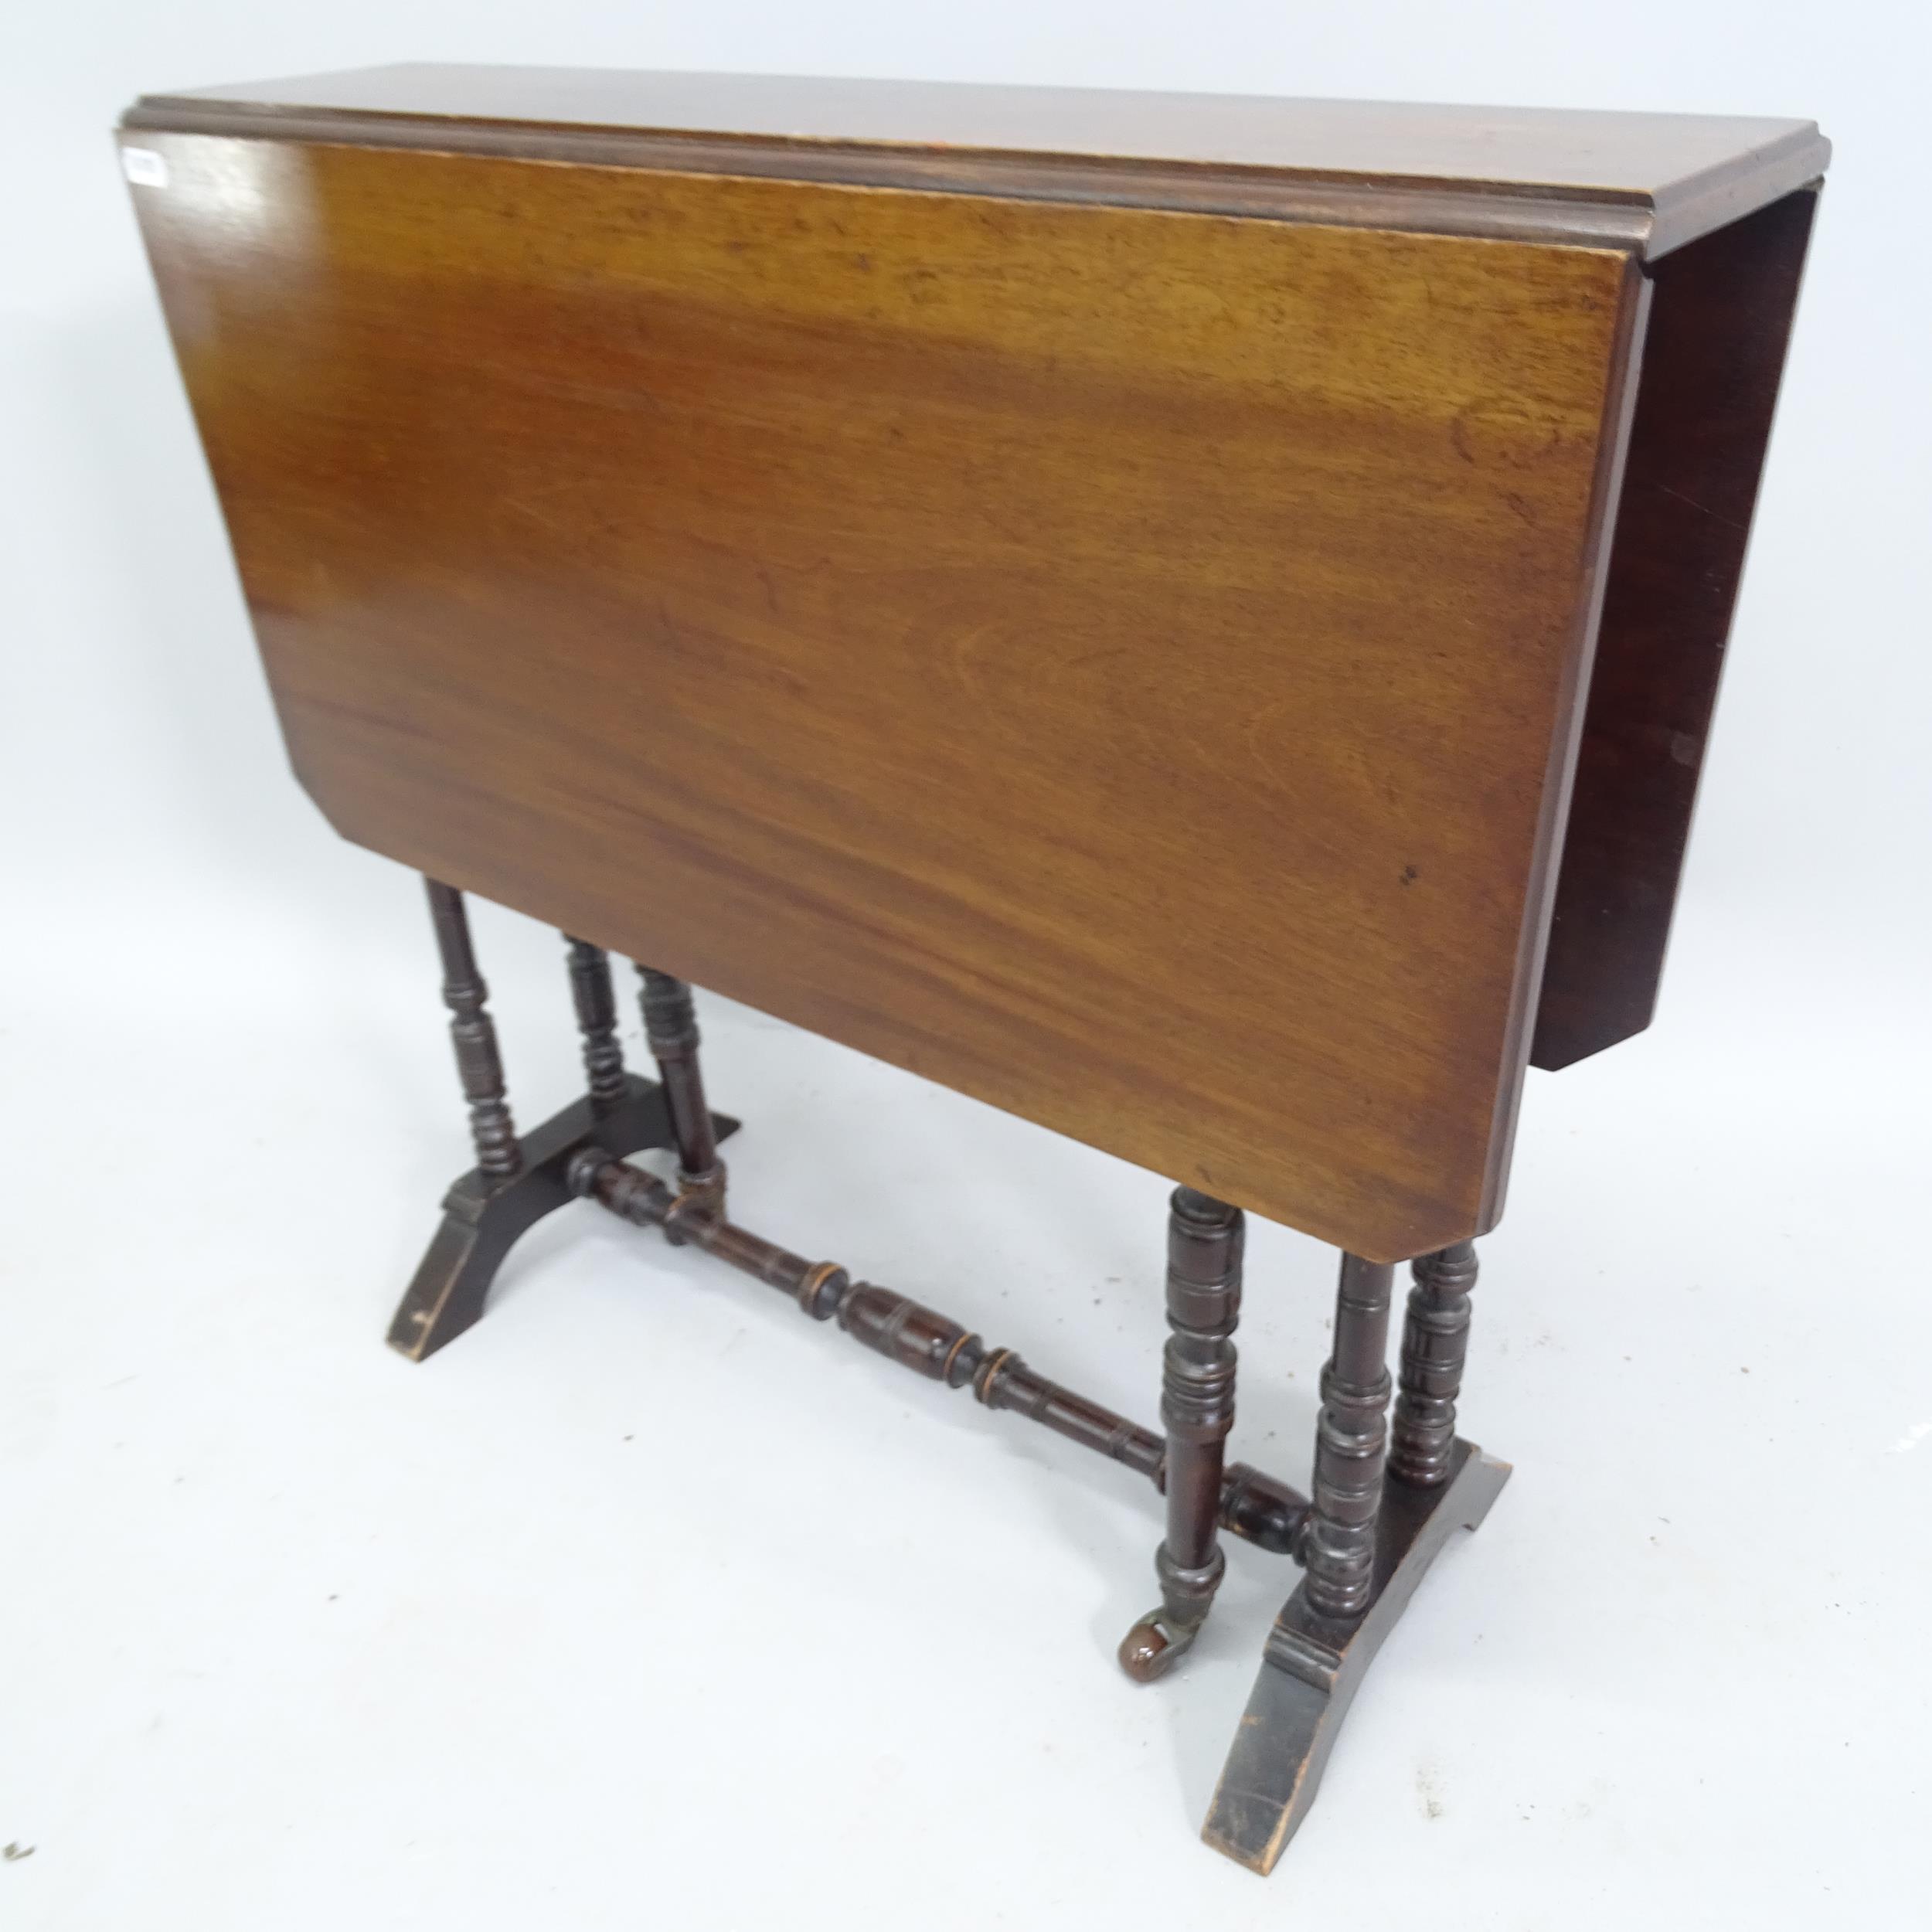 A Victorian mahogany Sutherland table, 61cm x 60cm x 16cm